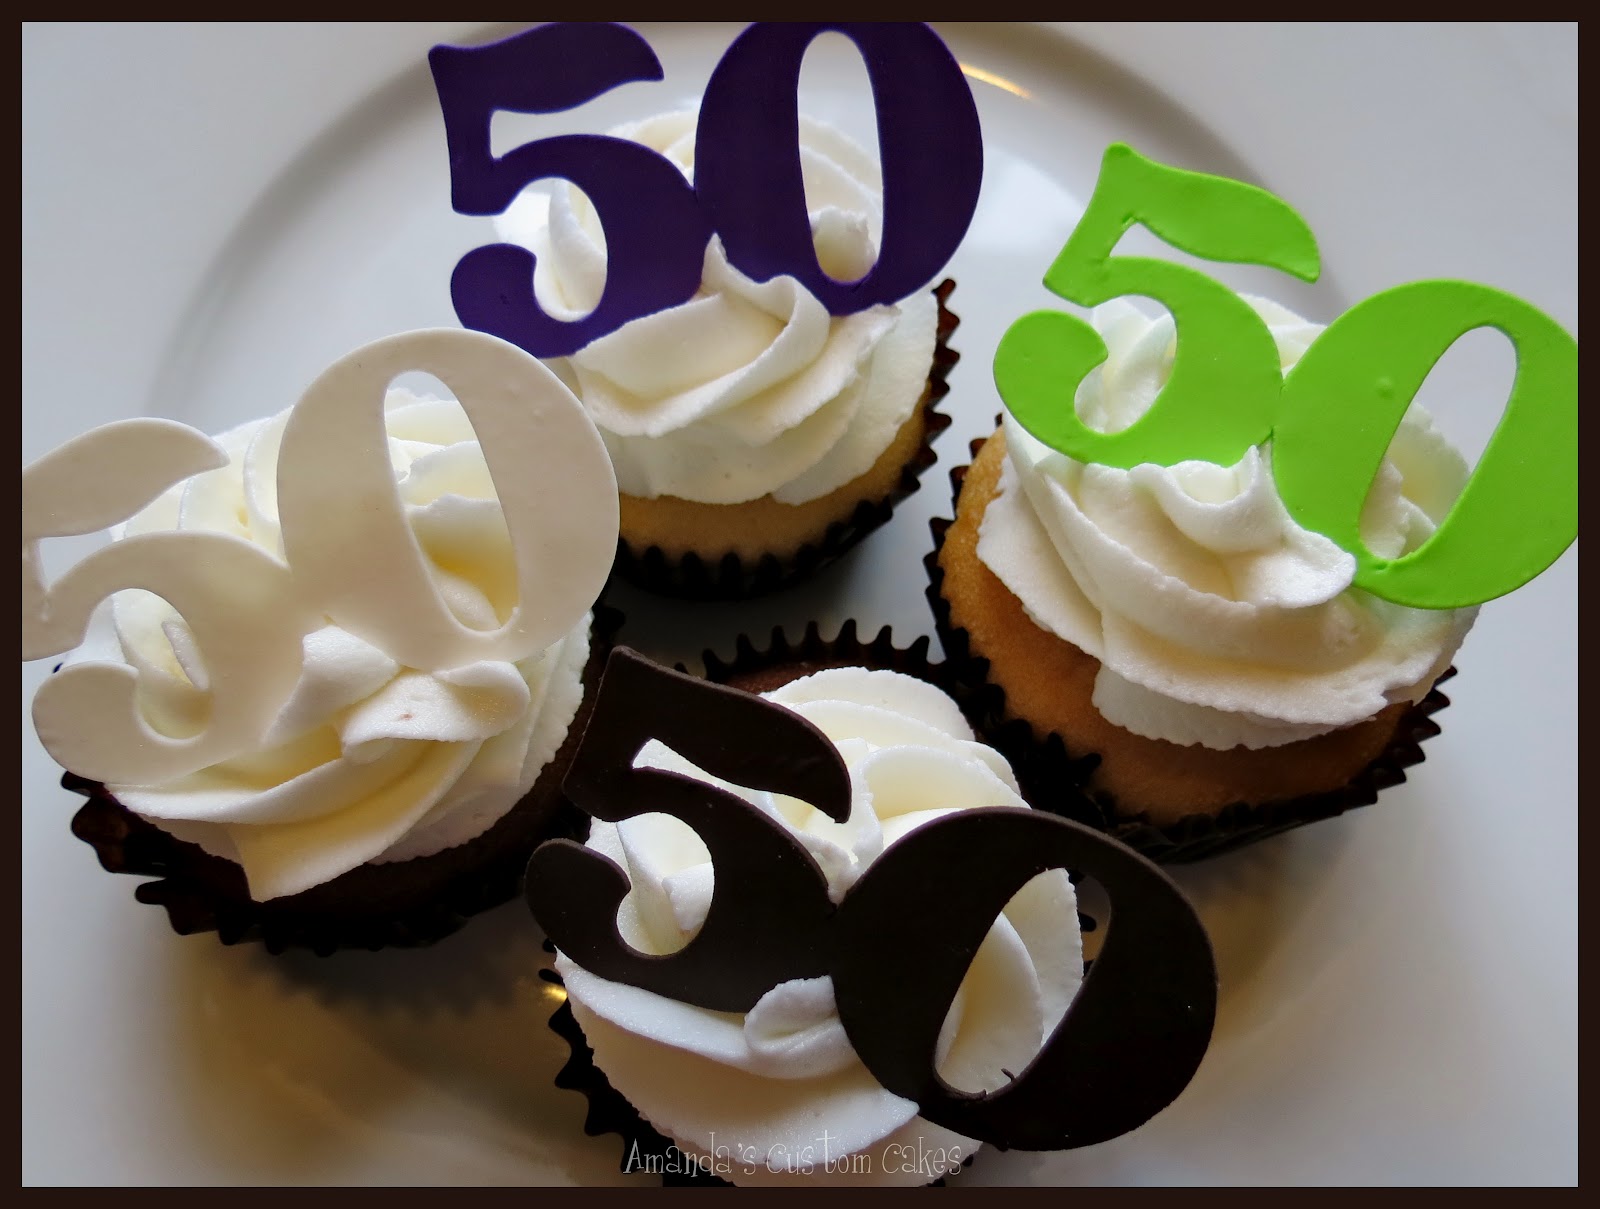 50th Birthday Cupcake Ideas for Women.